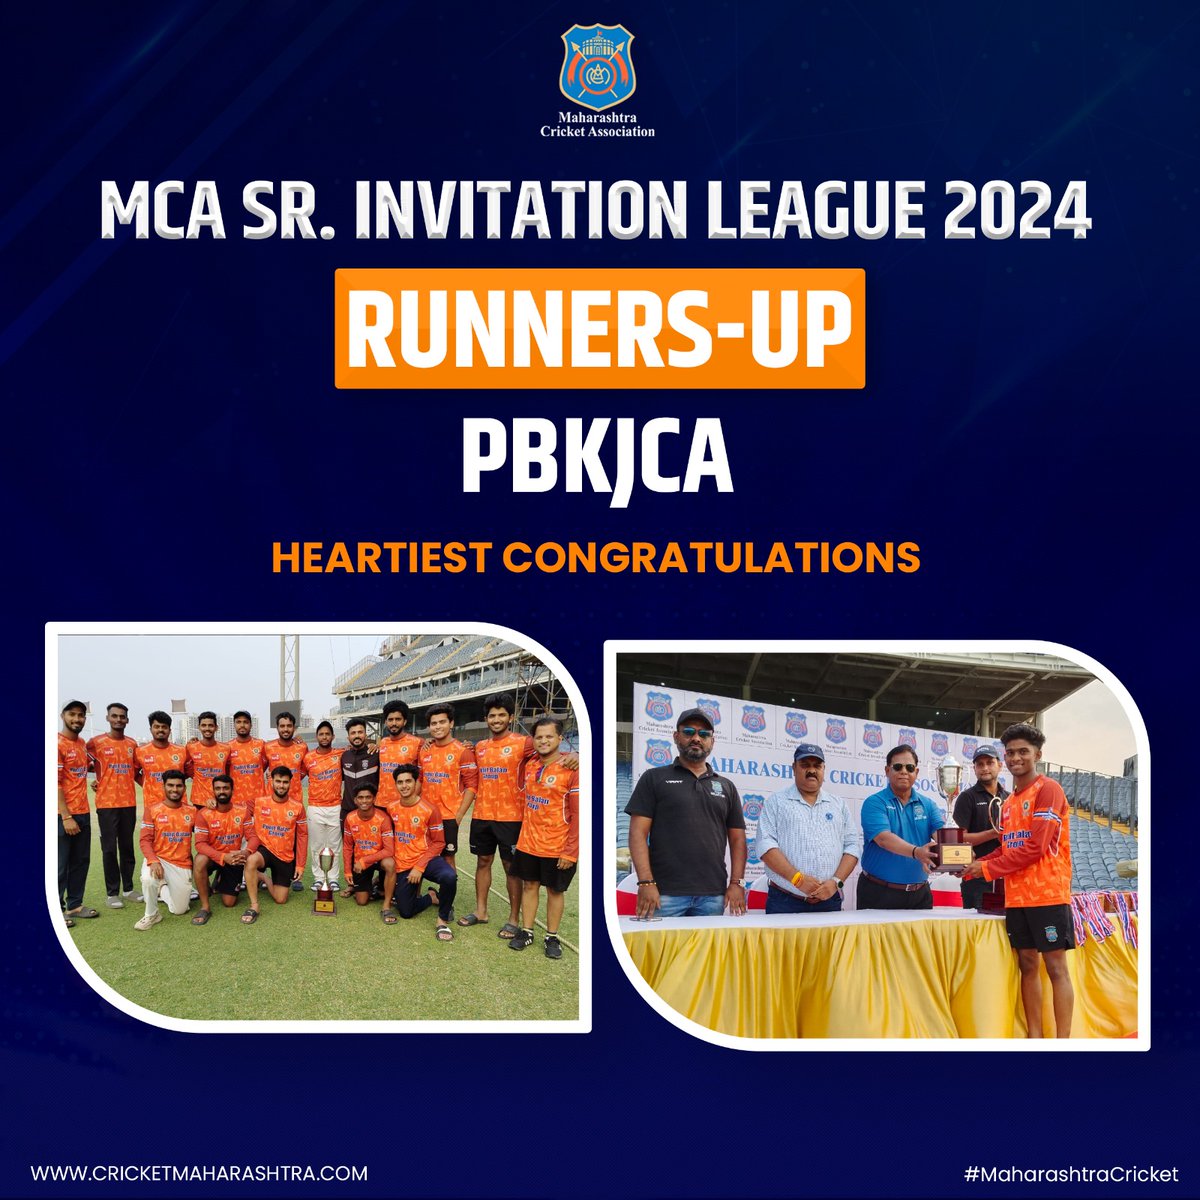 Well played, PBKJCA! Finishing strong as runners-up in the MCA Senior Invitation League 2024. #PBKJCA #MegaFinal #MCASeniorInvitationLeague #Cadence #MahaCricket #Cricket #MCA #MaharashtraCricket